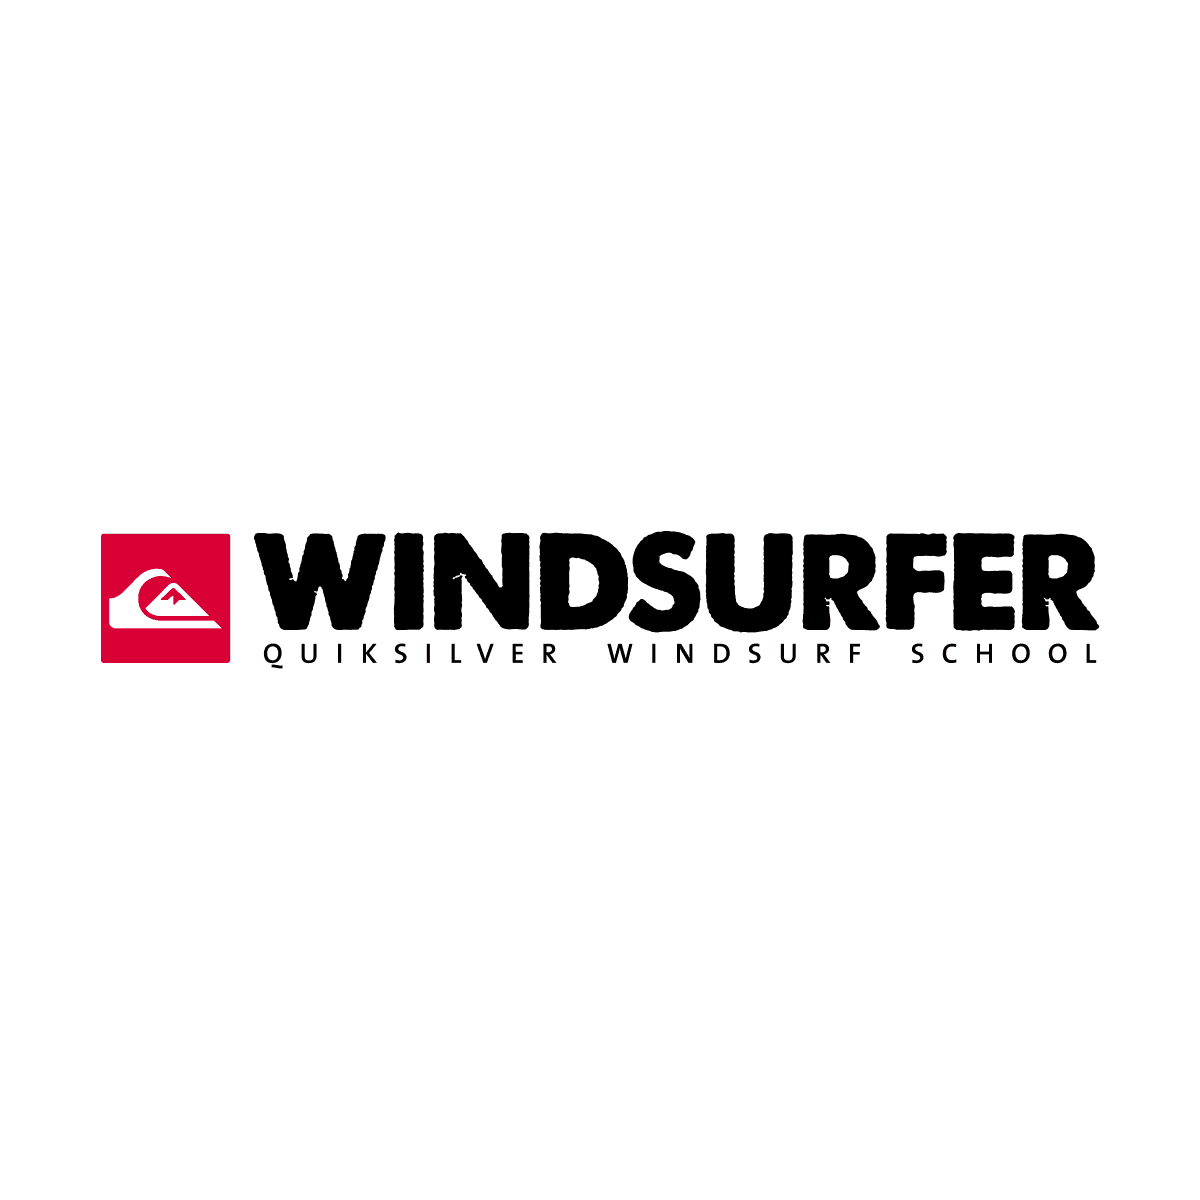 Old Quiksilver Logo - Windsurfer - Quiksilver Windsurf School